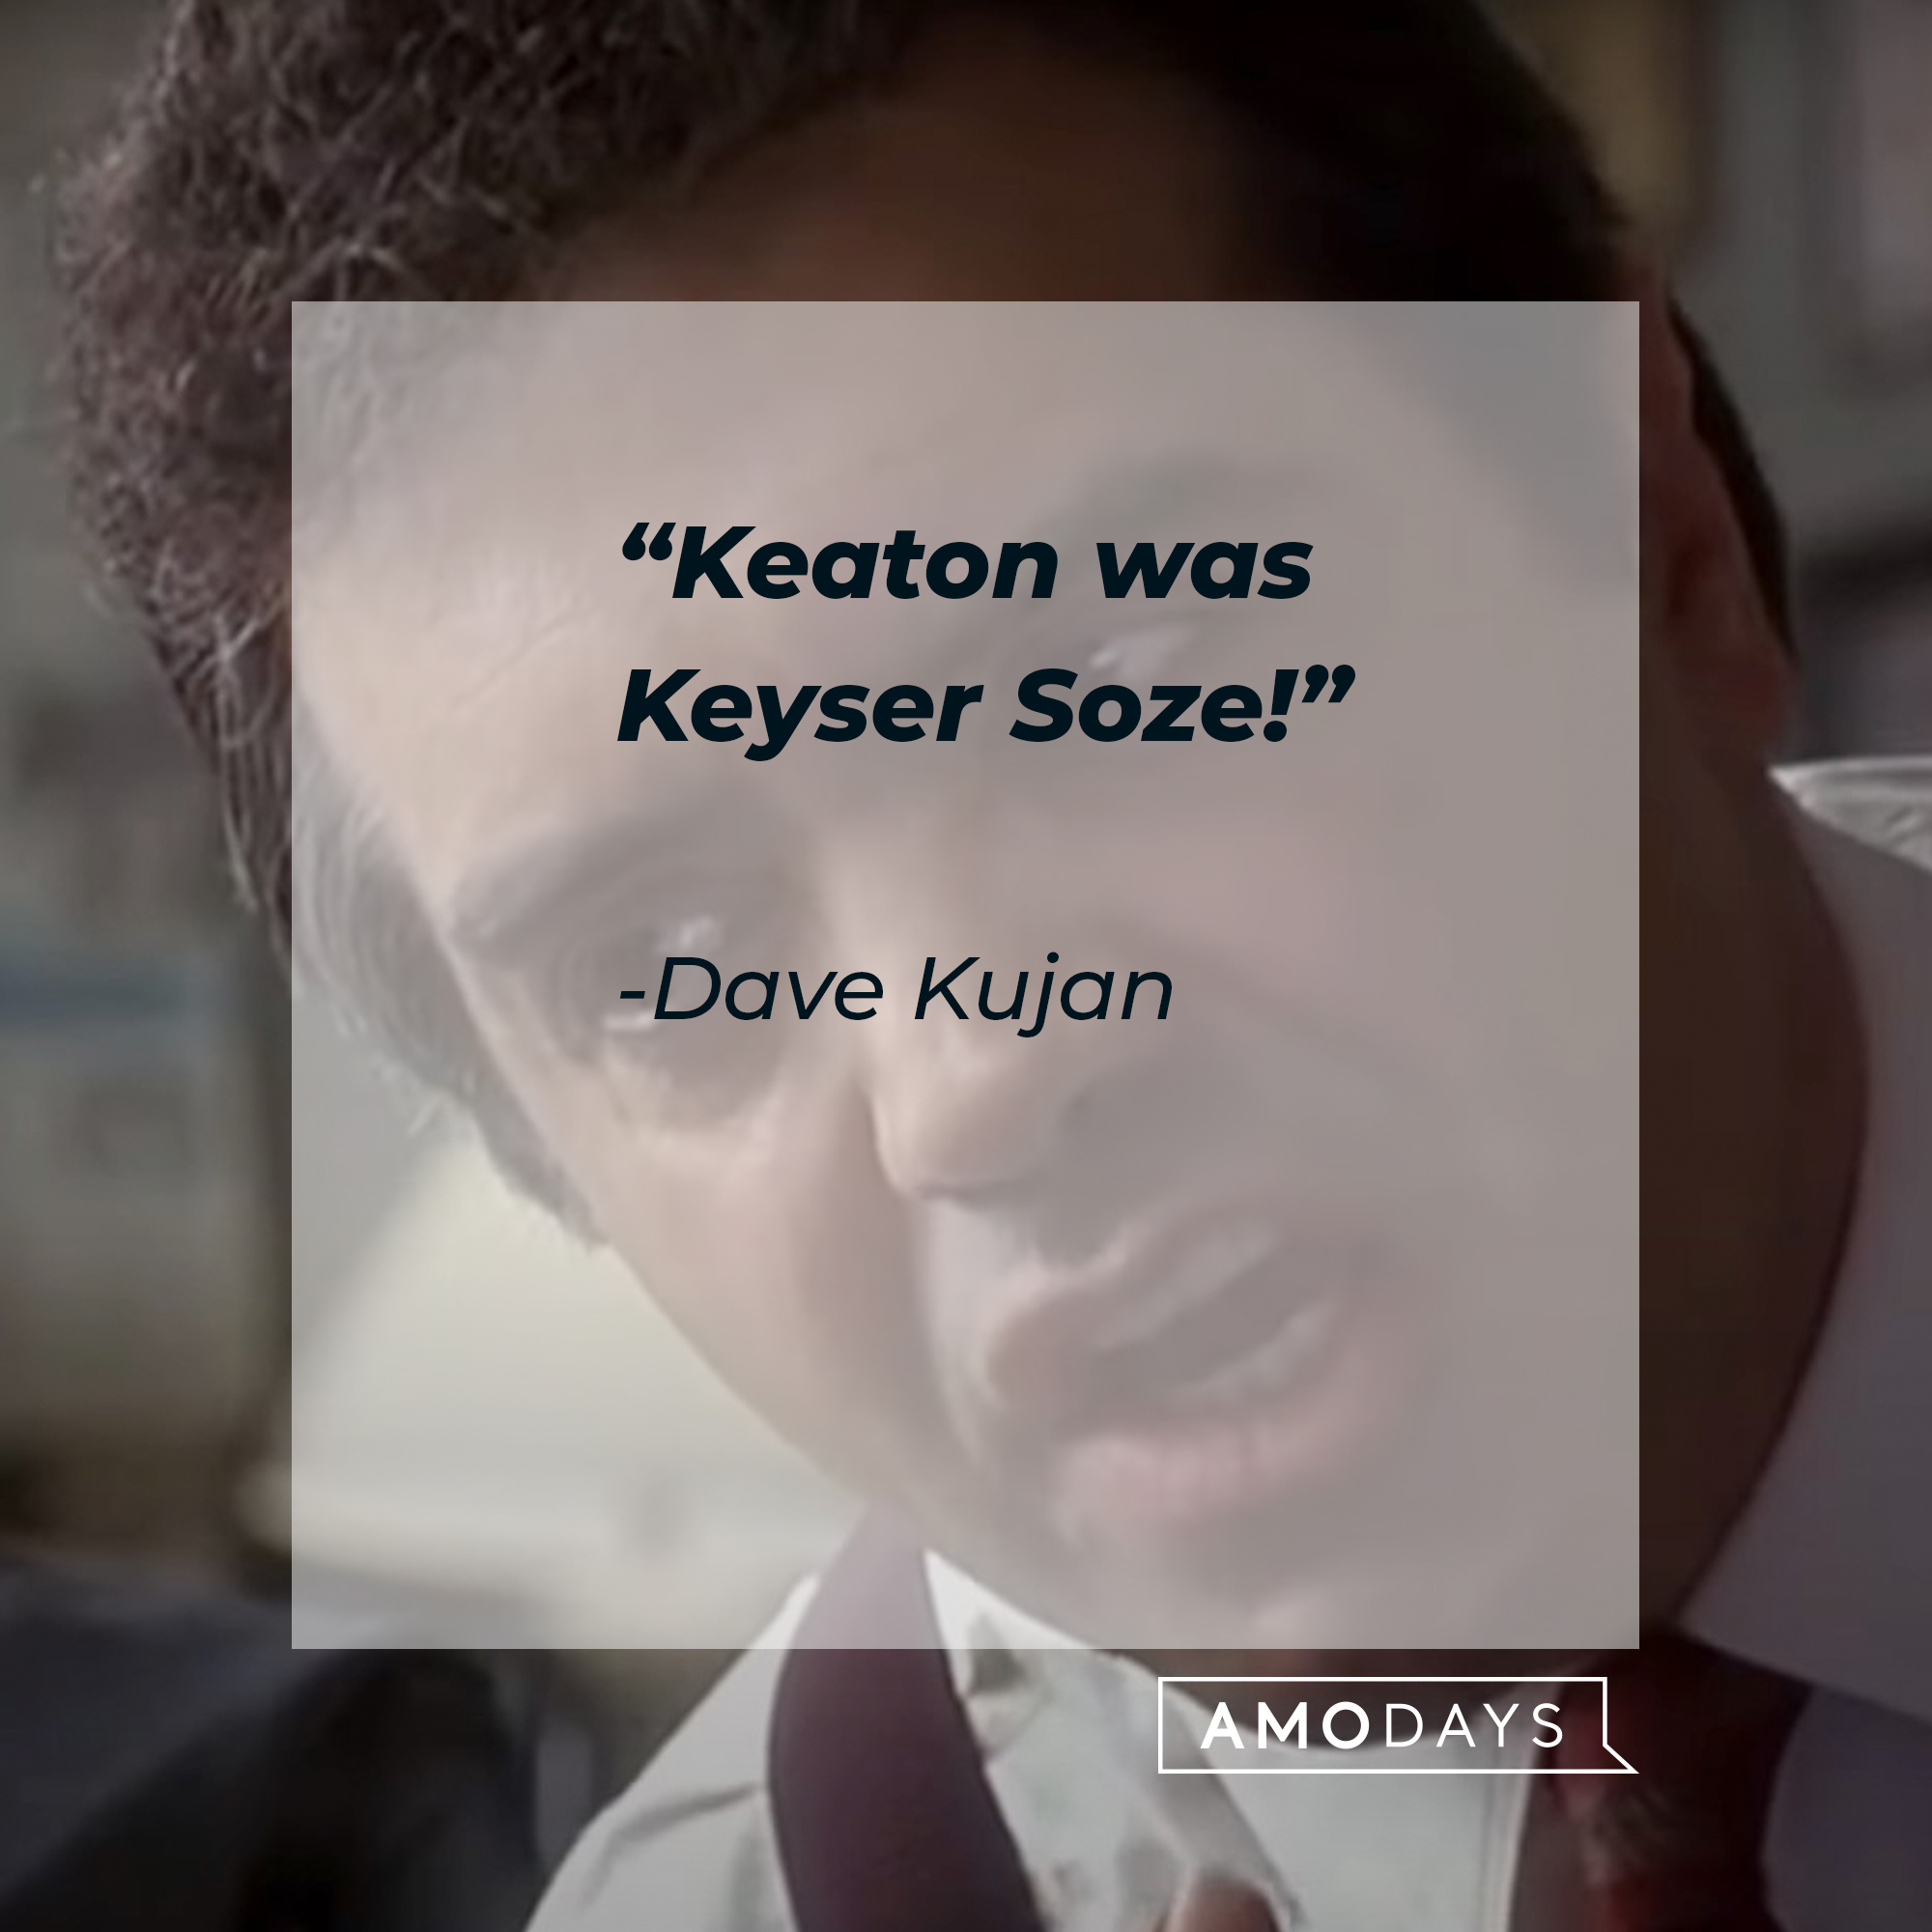 Dave Kujan's quote: “Keaton was Keyser Soze!” | Source: facebook.com/usualsuspectsmovie